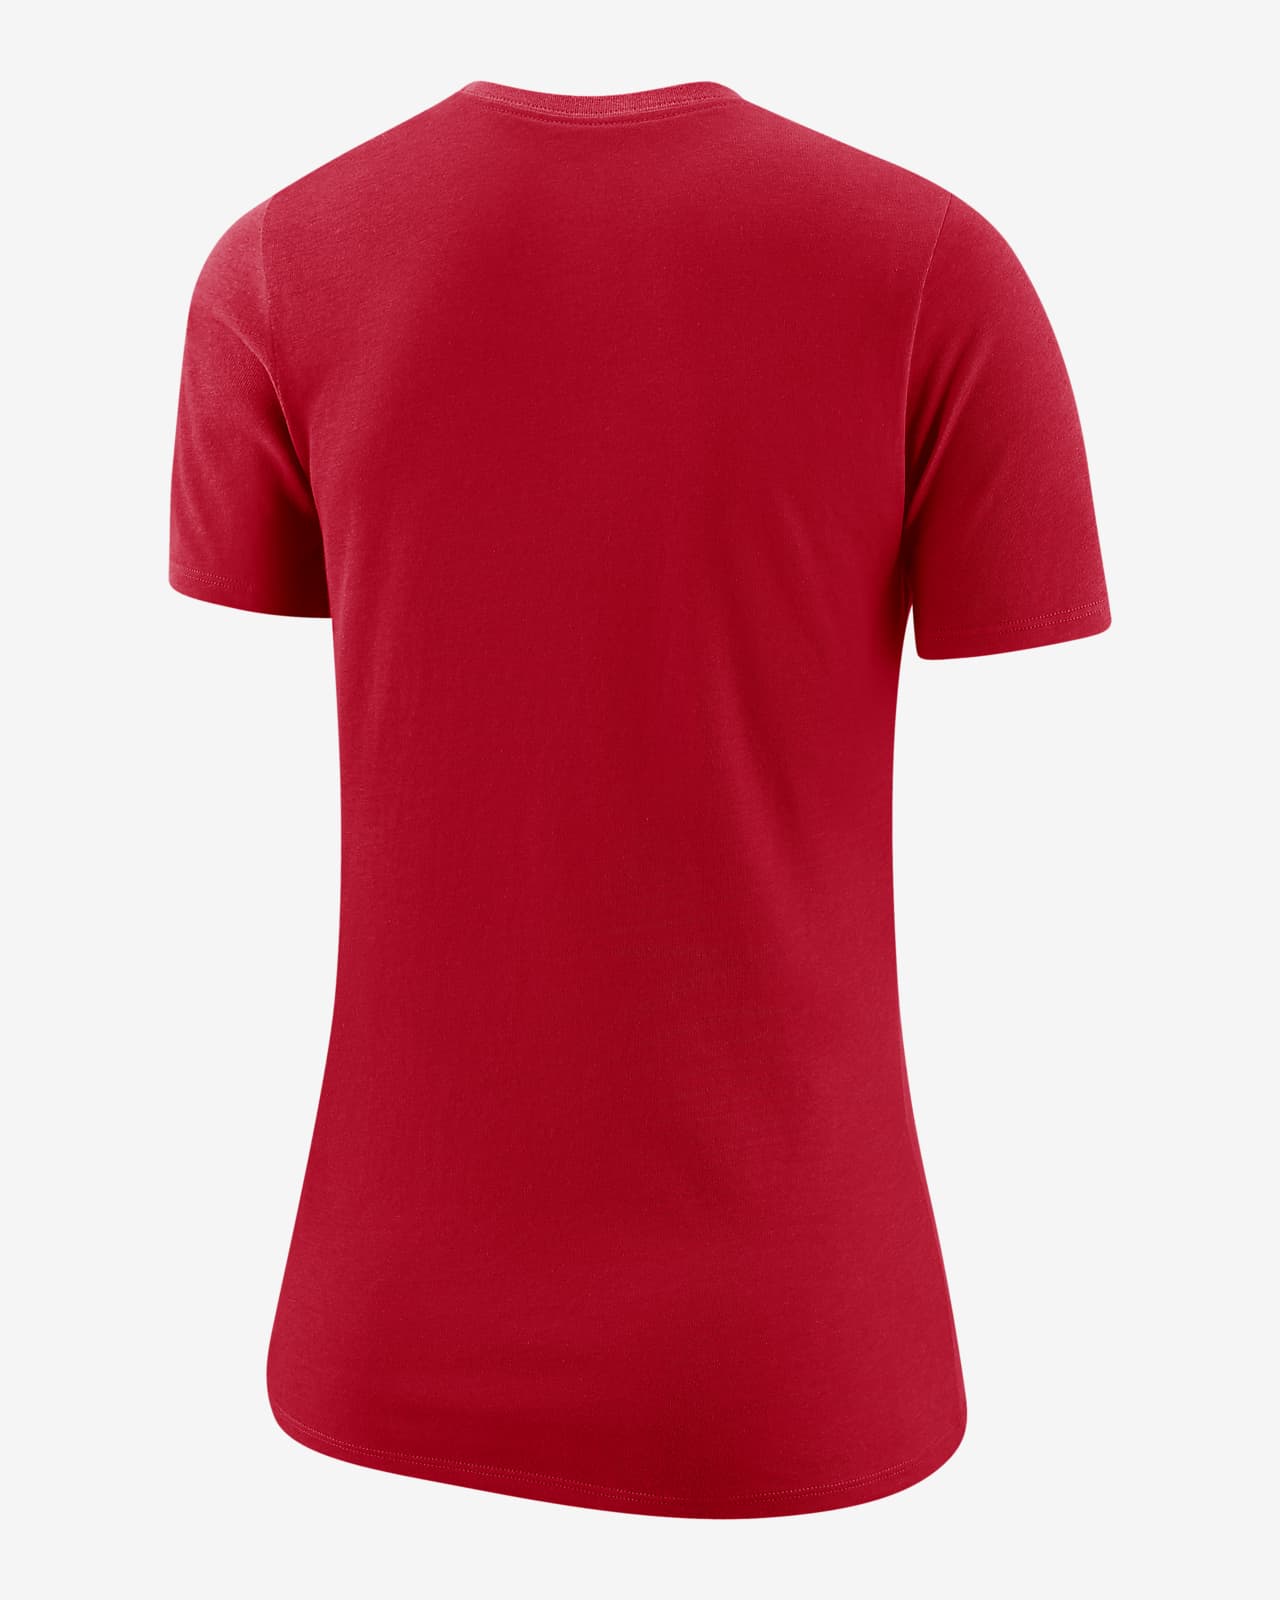 red dri fit shirt womens